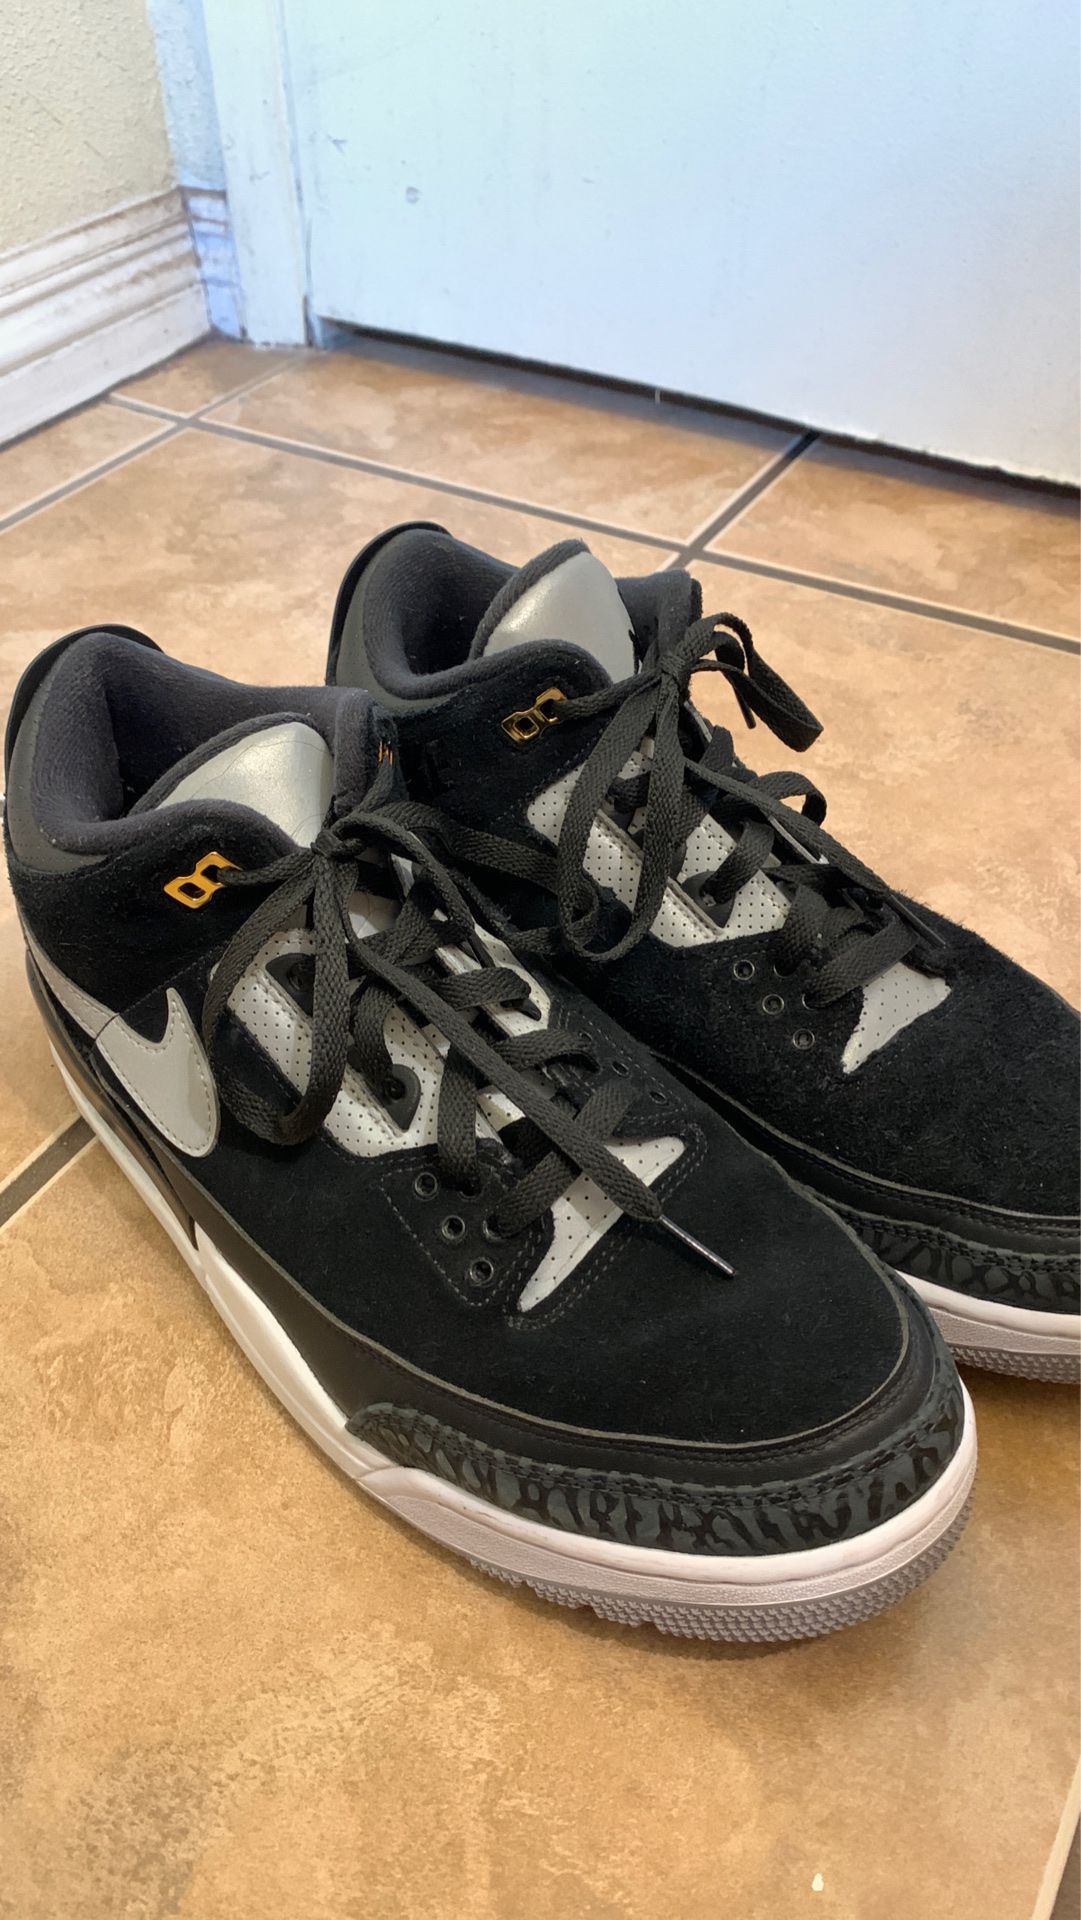 Nike air Jordan 4’s black, gray and white